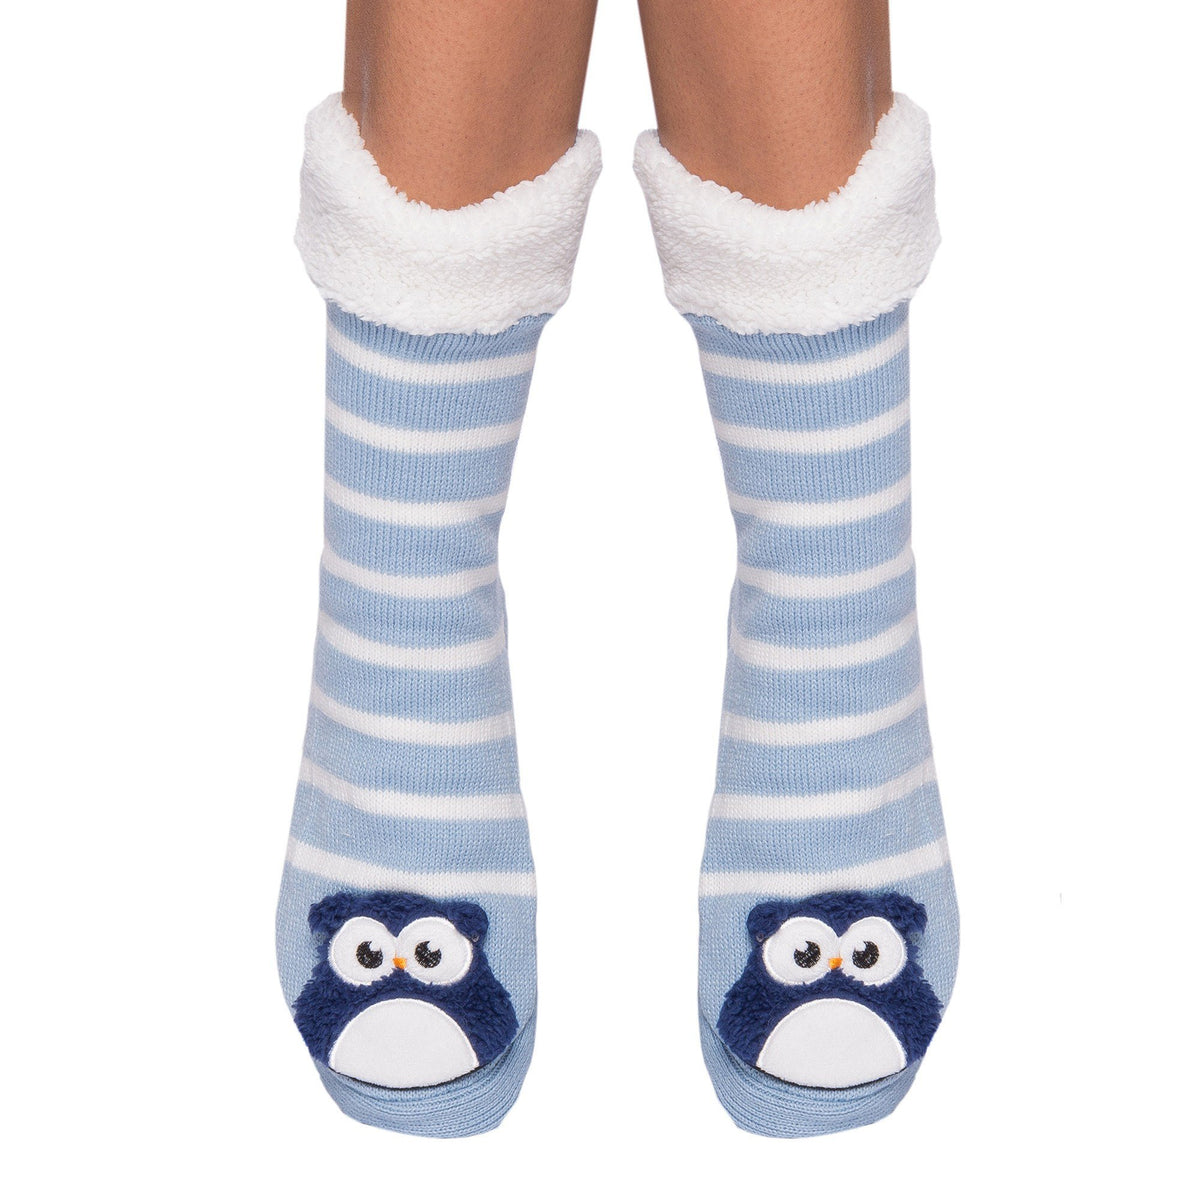 Women's Cute Knit Animal Face Slipper Socks - Owl Blue